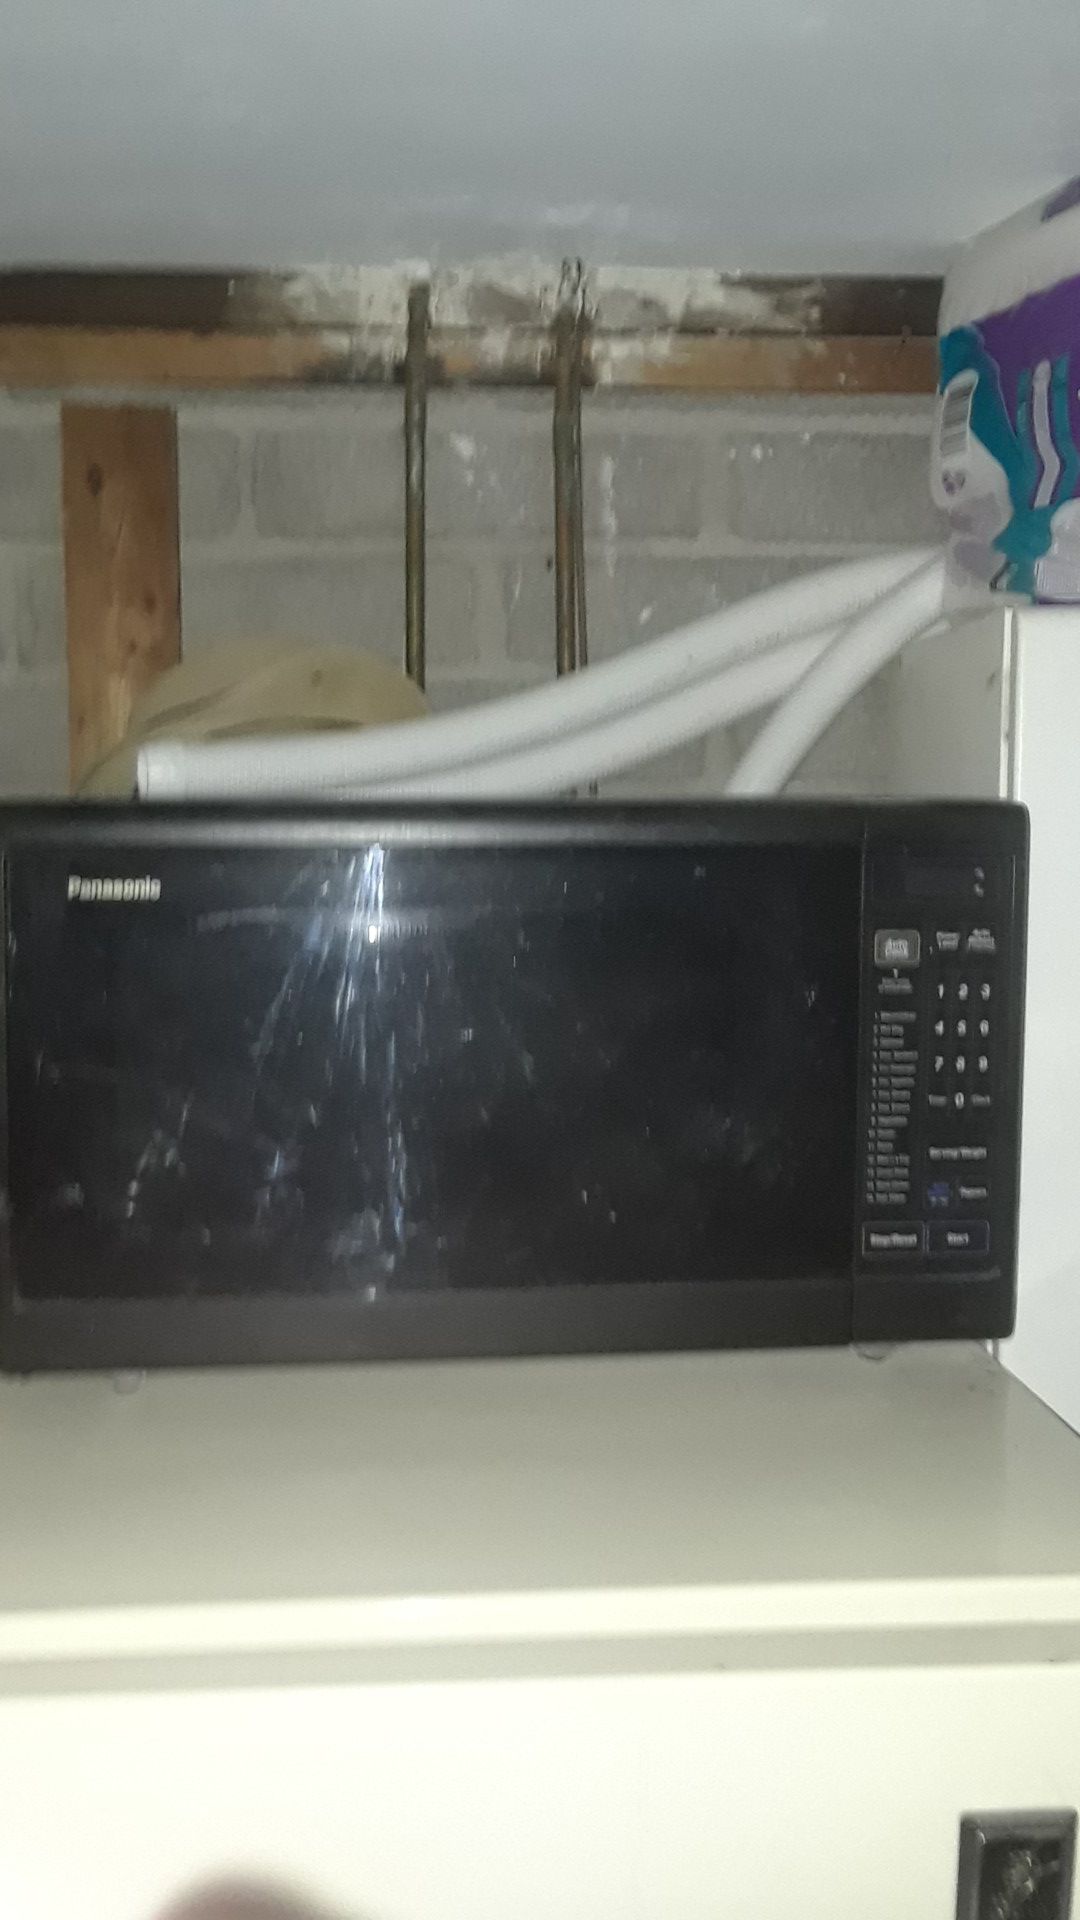 Panasonic microwave with turntable